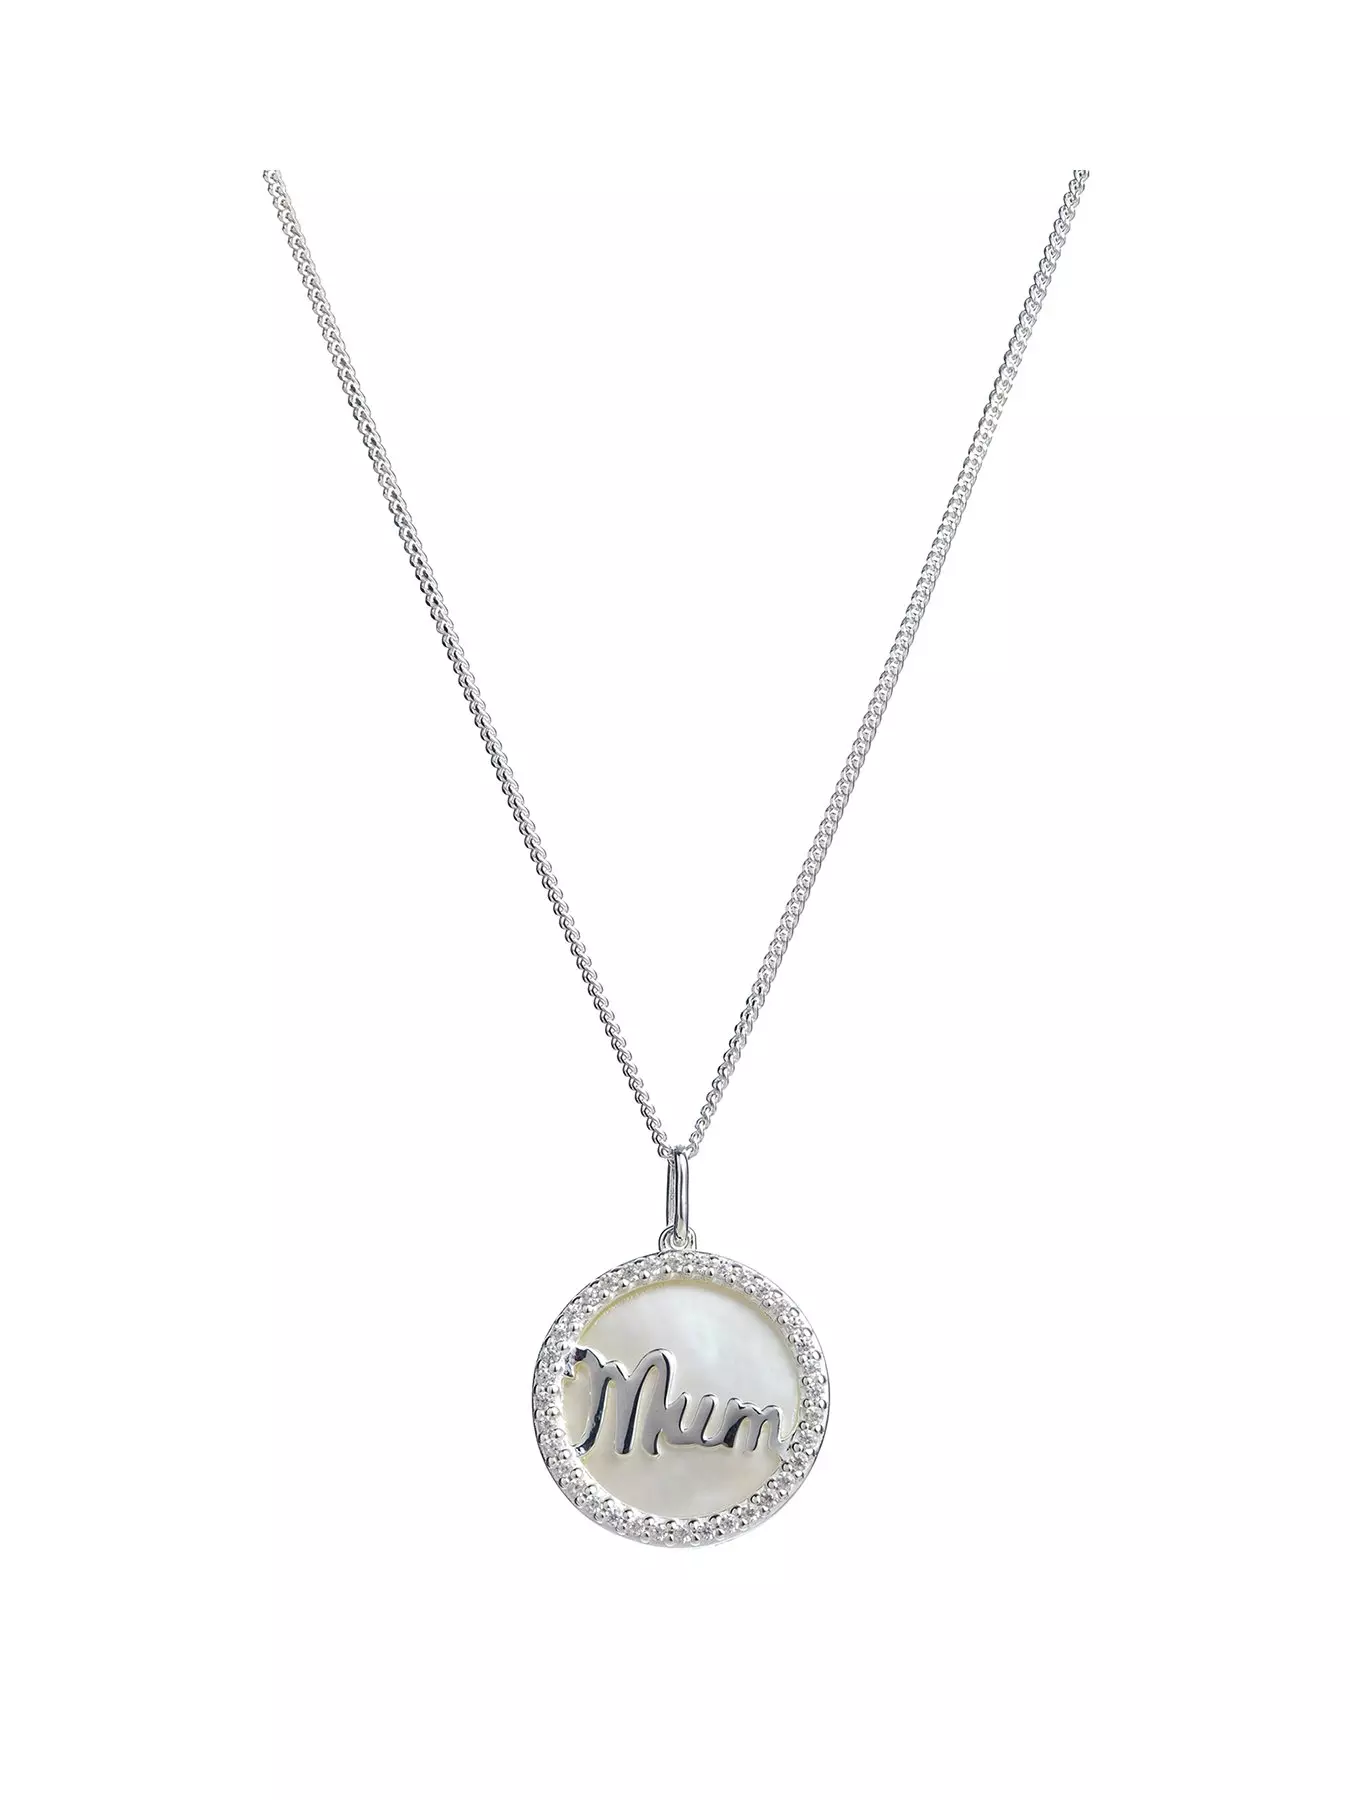 Vivienne Monogram Pendant, Pink Gold, Mother-Of-Pearl, Wood & Diamonds -  Jewelry - Categories